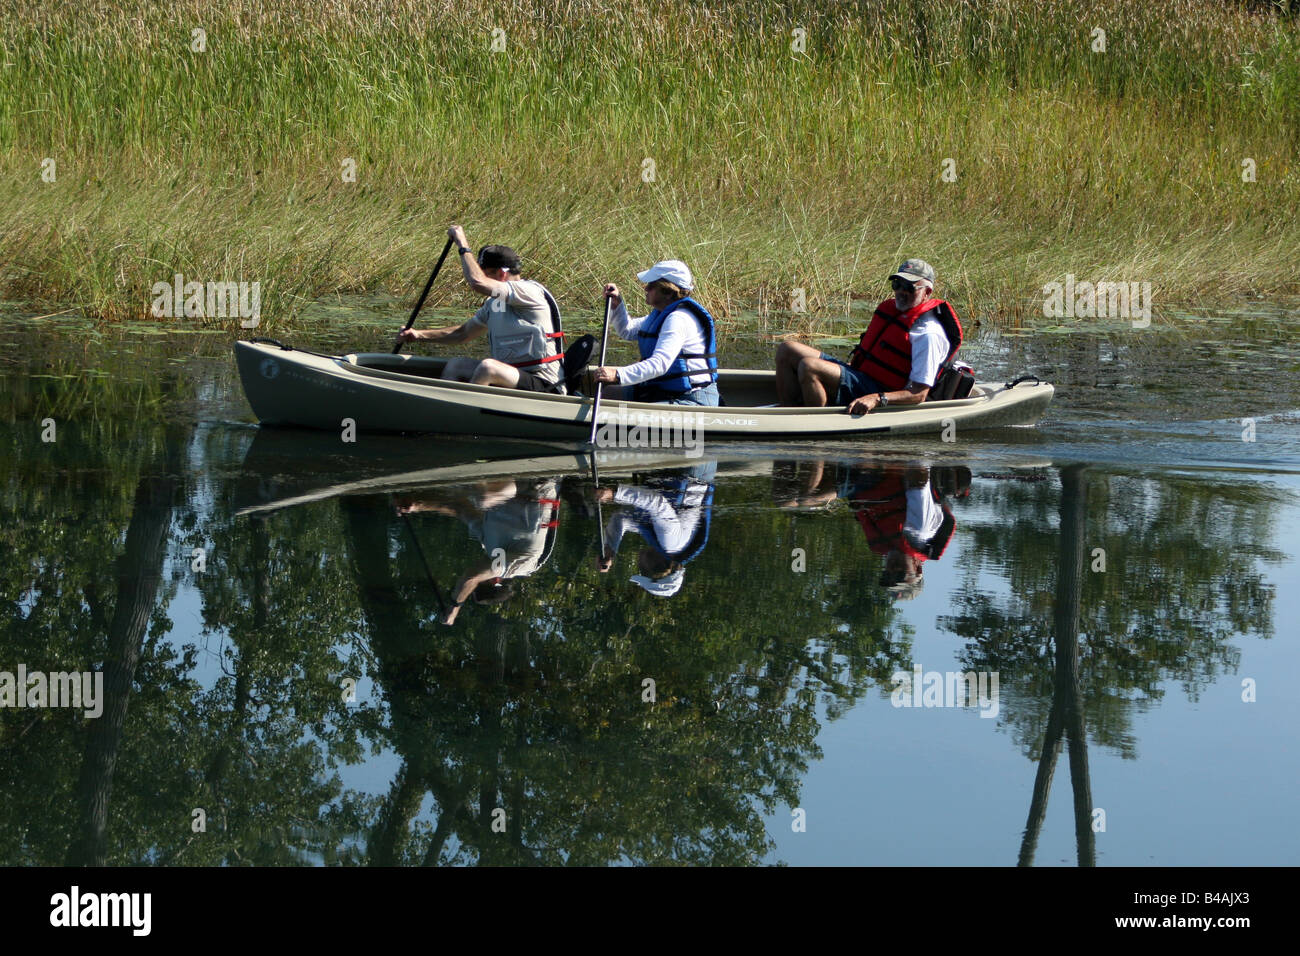 Three people in canoe on Presque Isle, Pennsylvania Stock Photo